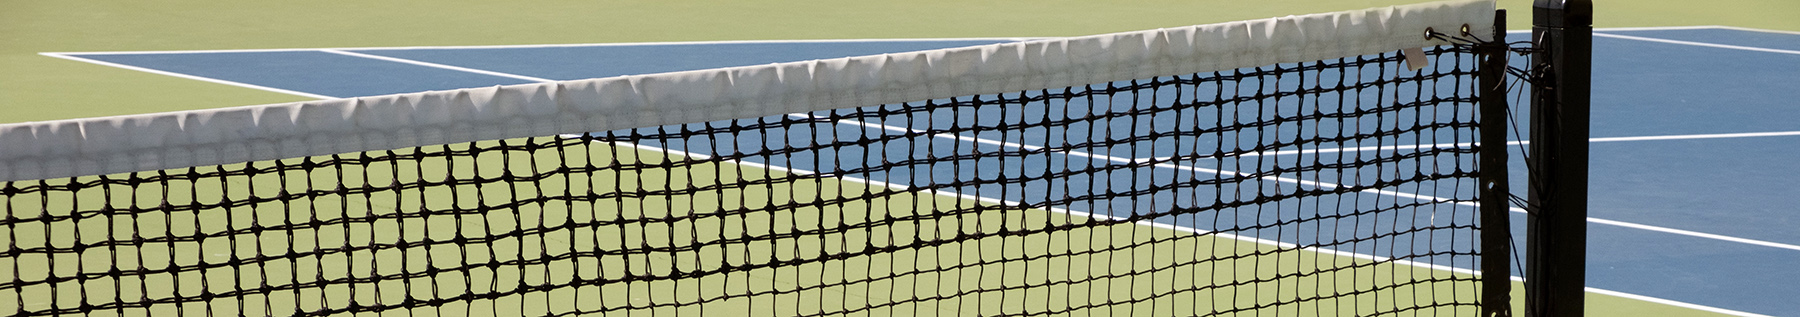 net on a tennis or pickleball court